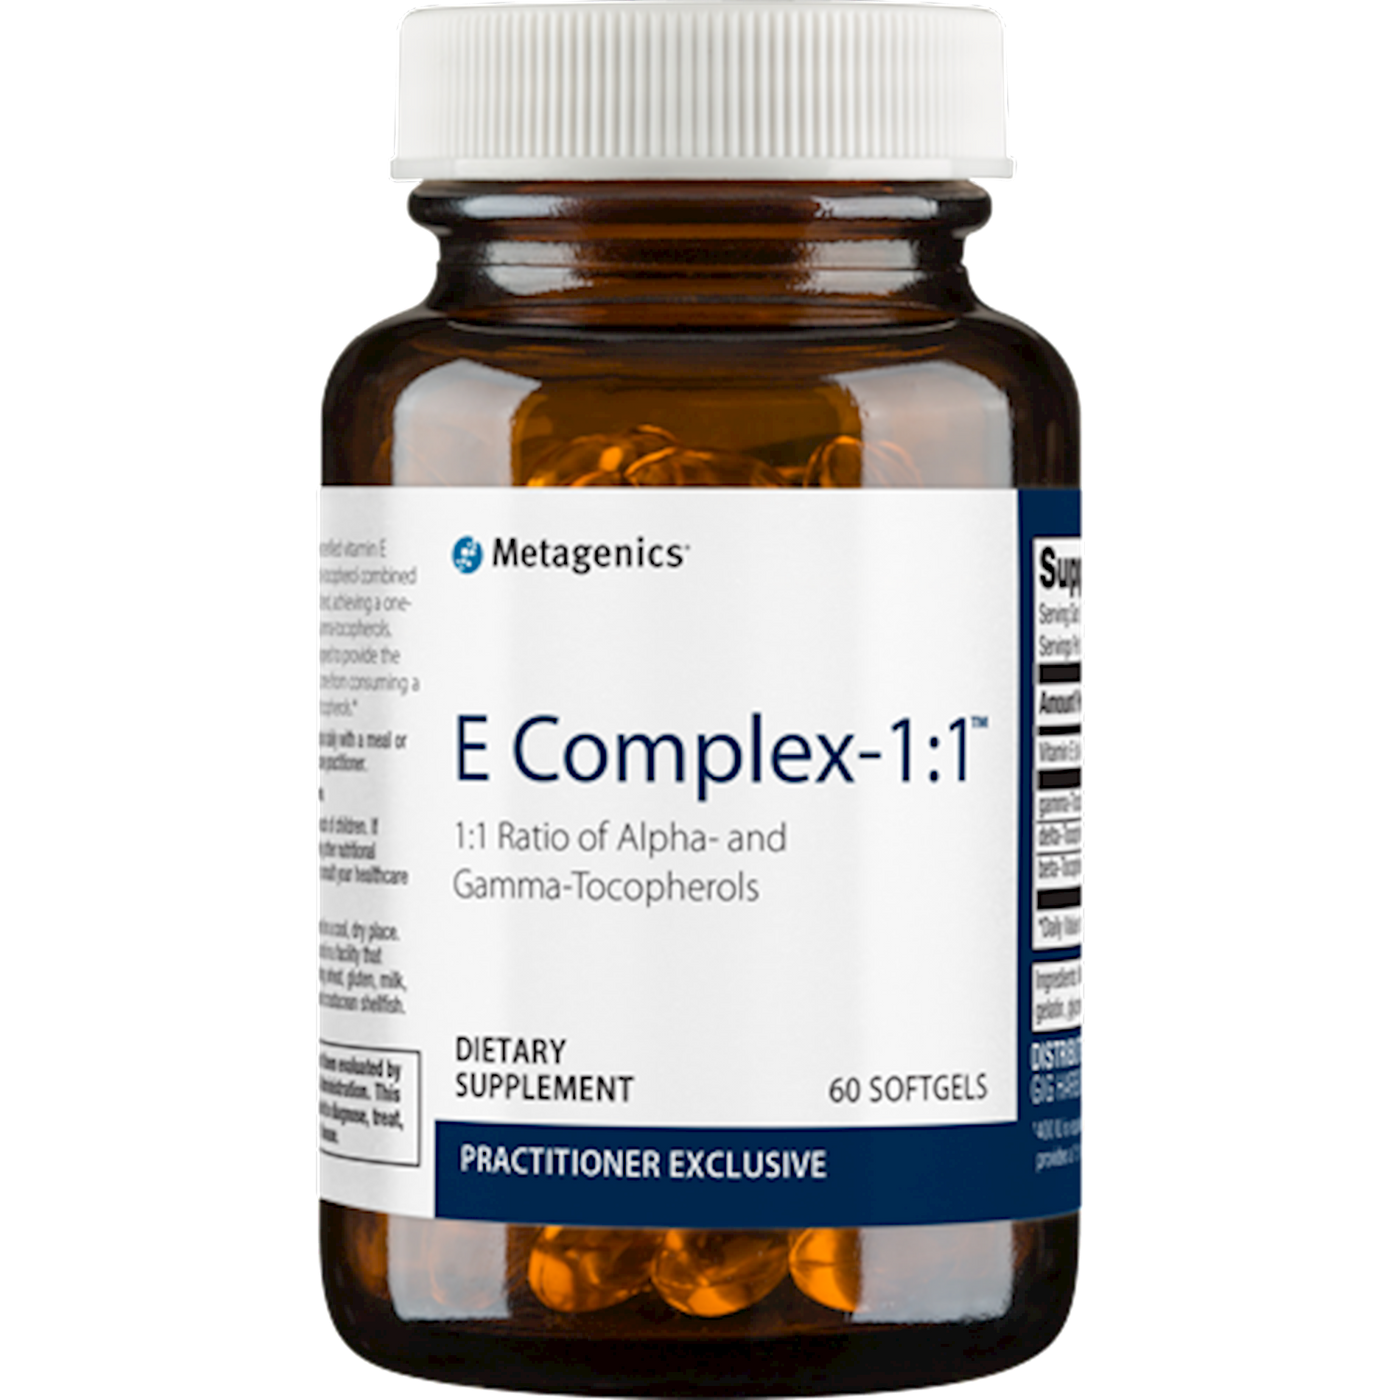 E Complex-1:1  Curated Wellness